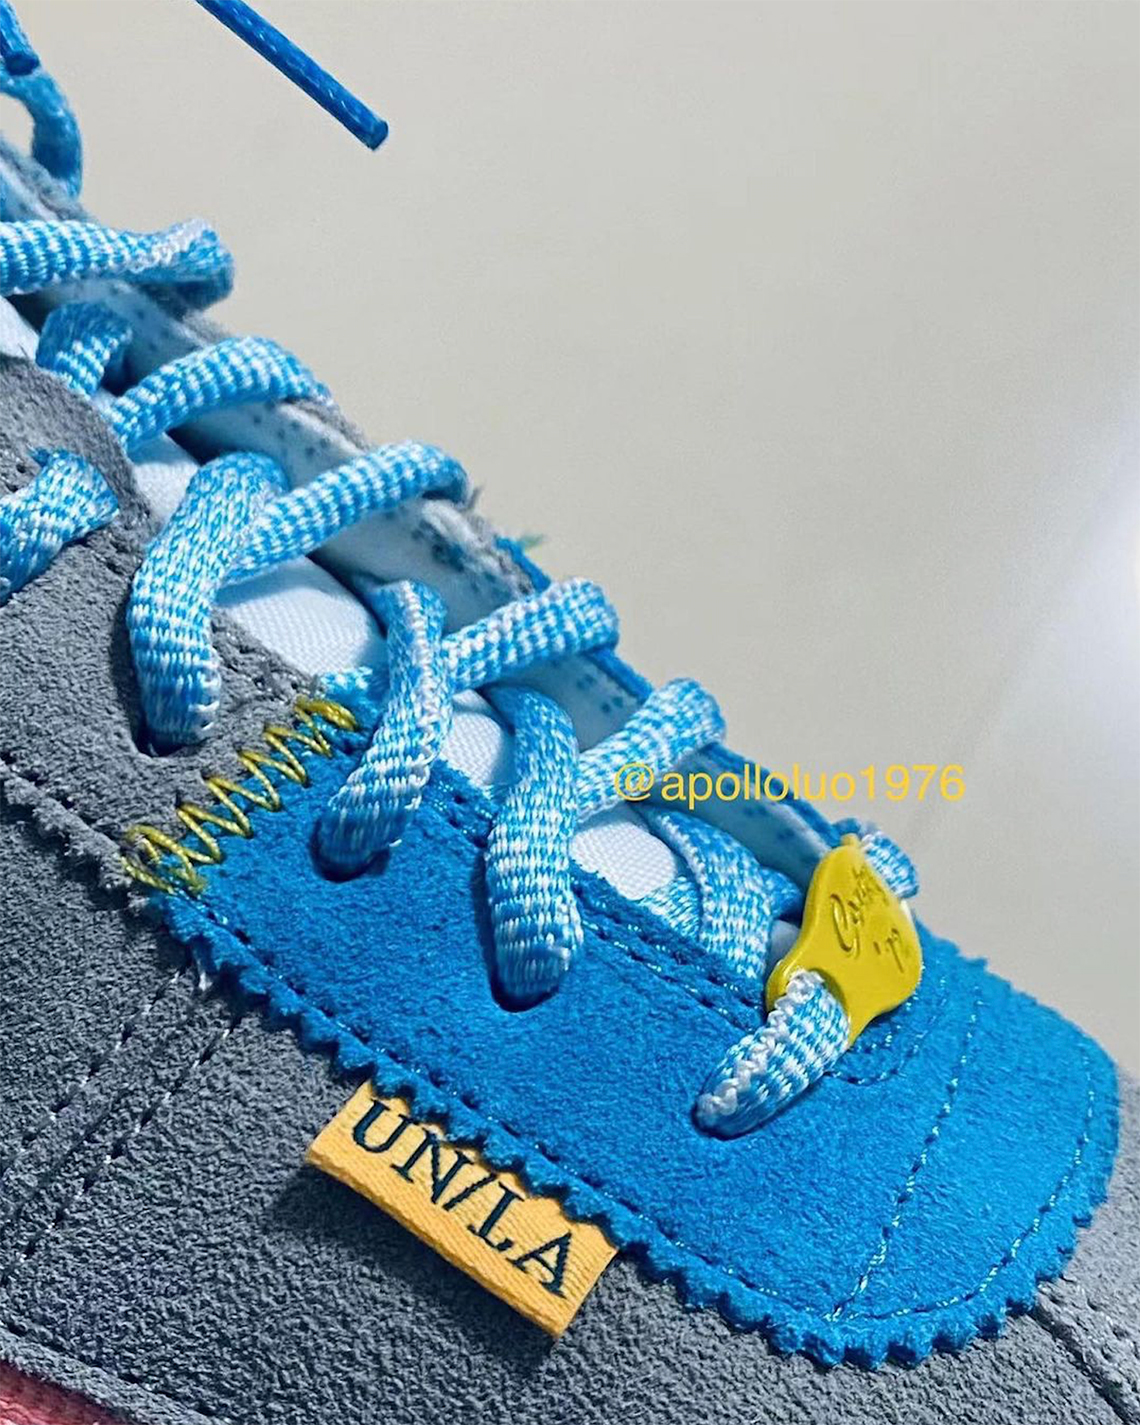 Union Nike Cortez Grey Pink Blue Yellow 1